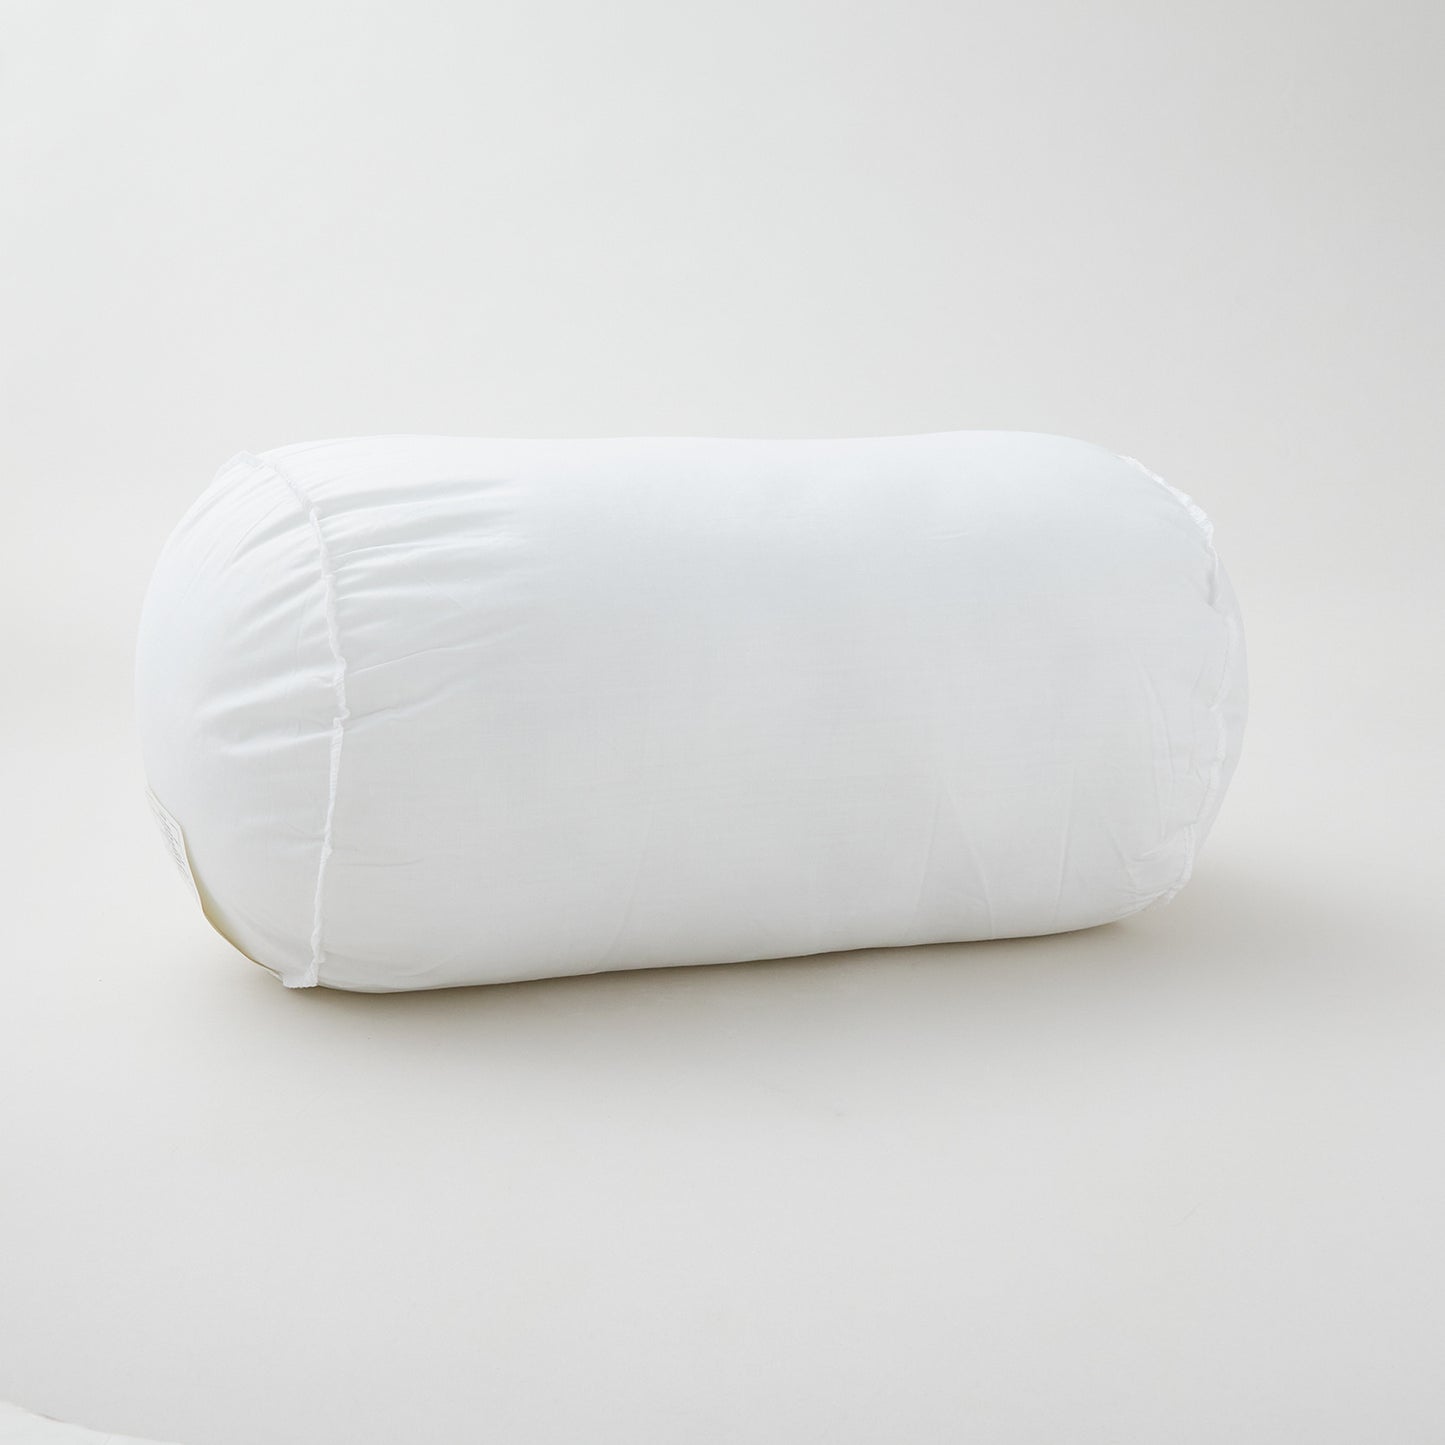 Soft Touch Neck Roll Pillow - 9" x 14" Alternative View #1